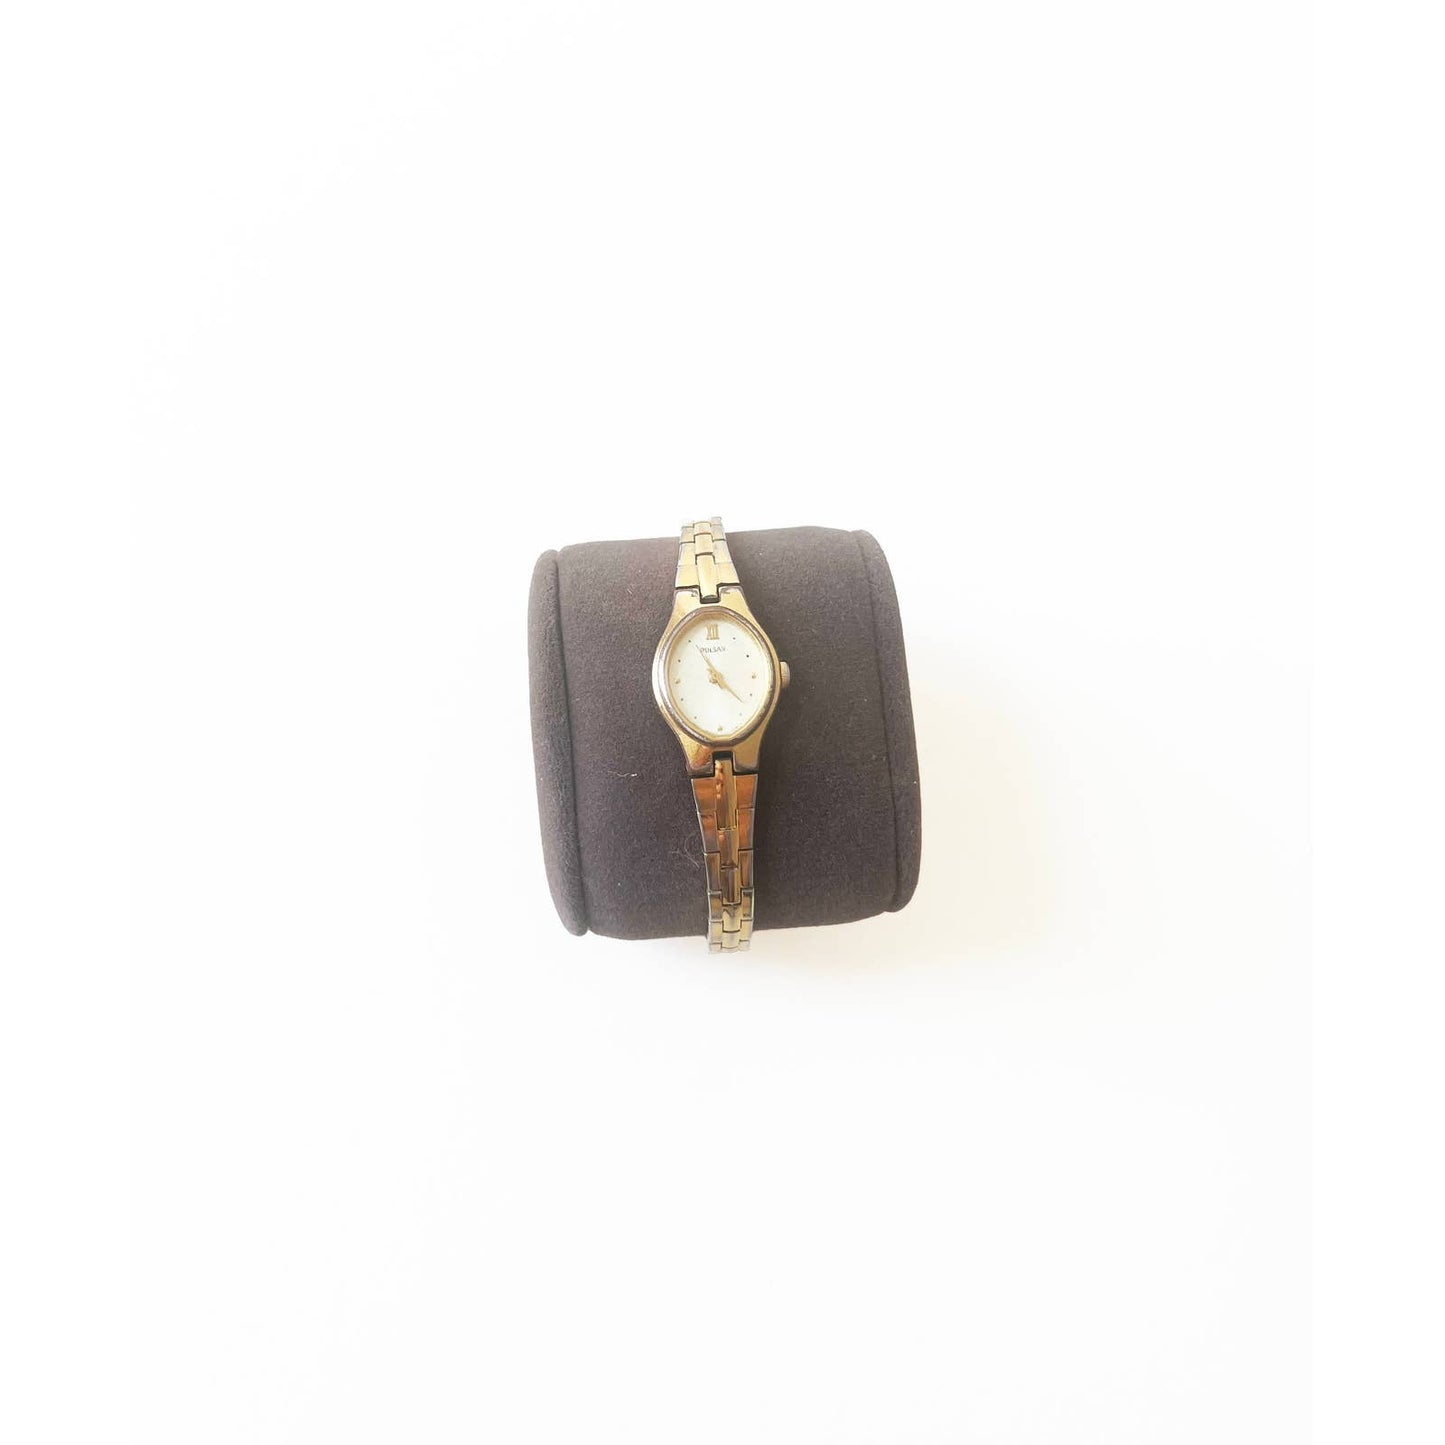 Vintage Gold Bracelet Watch